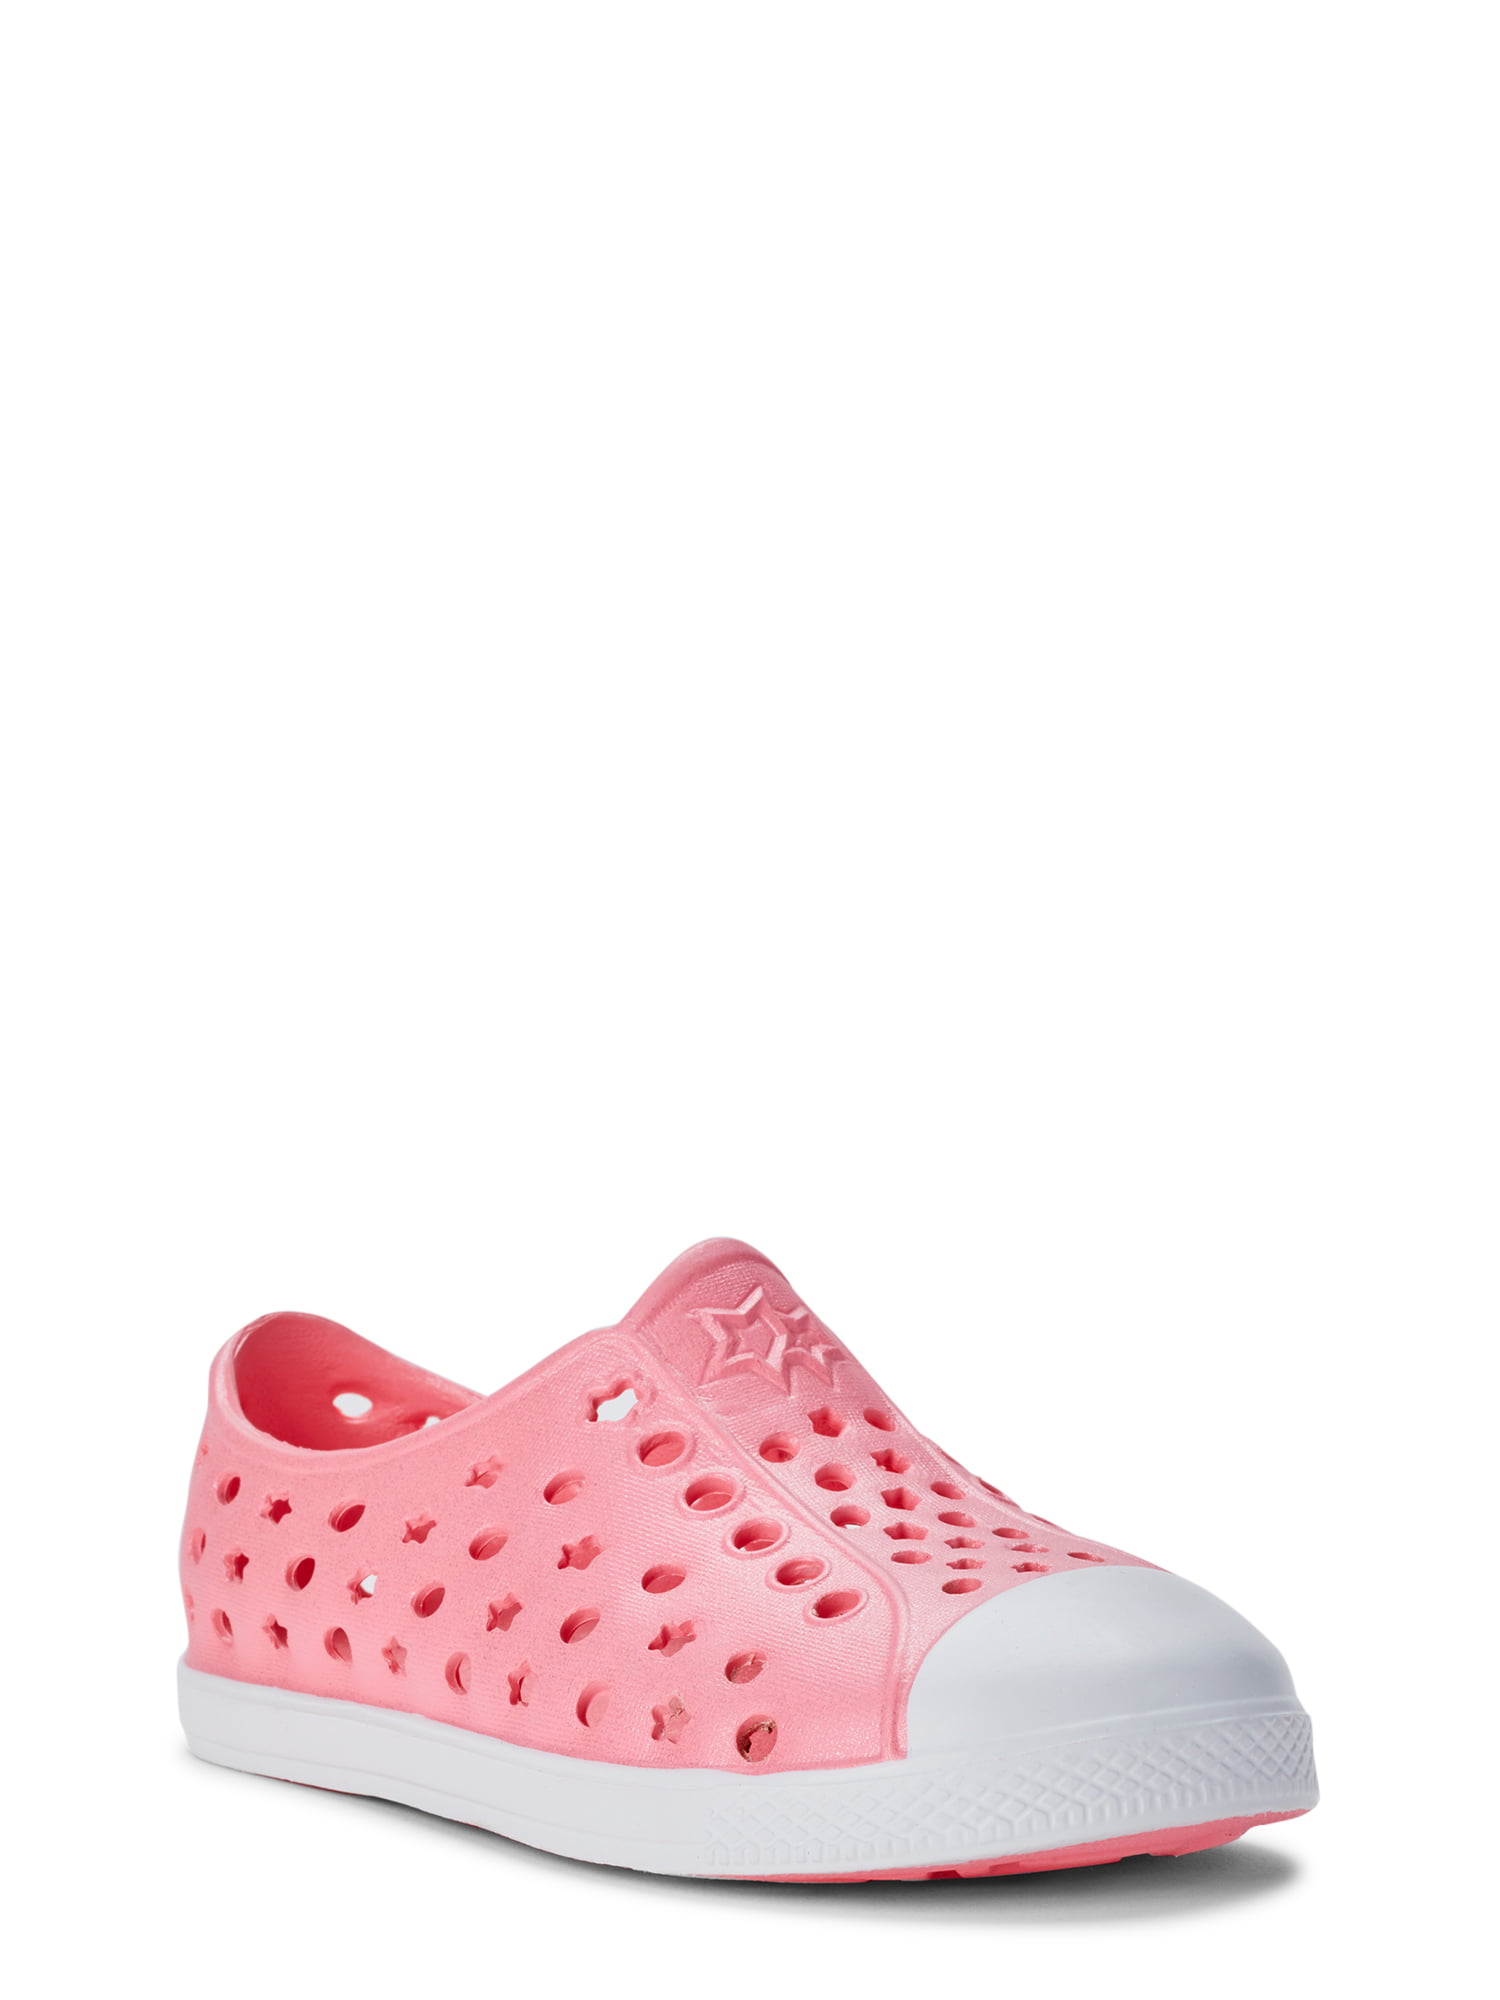 walmart pink sneakers